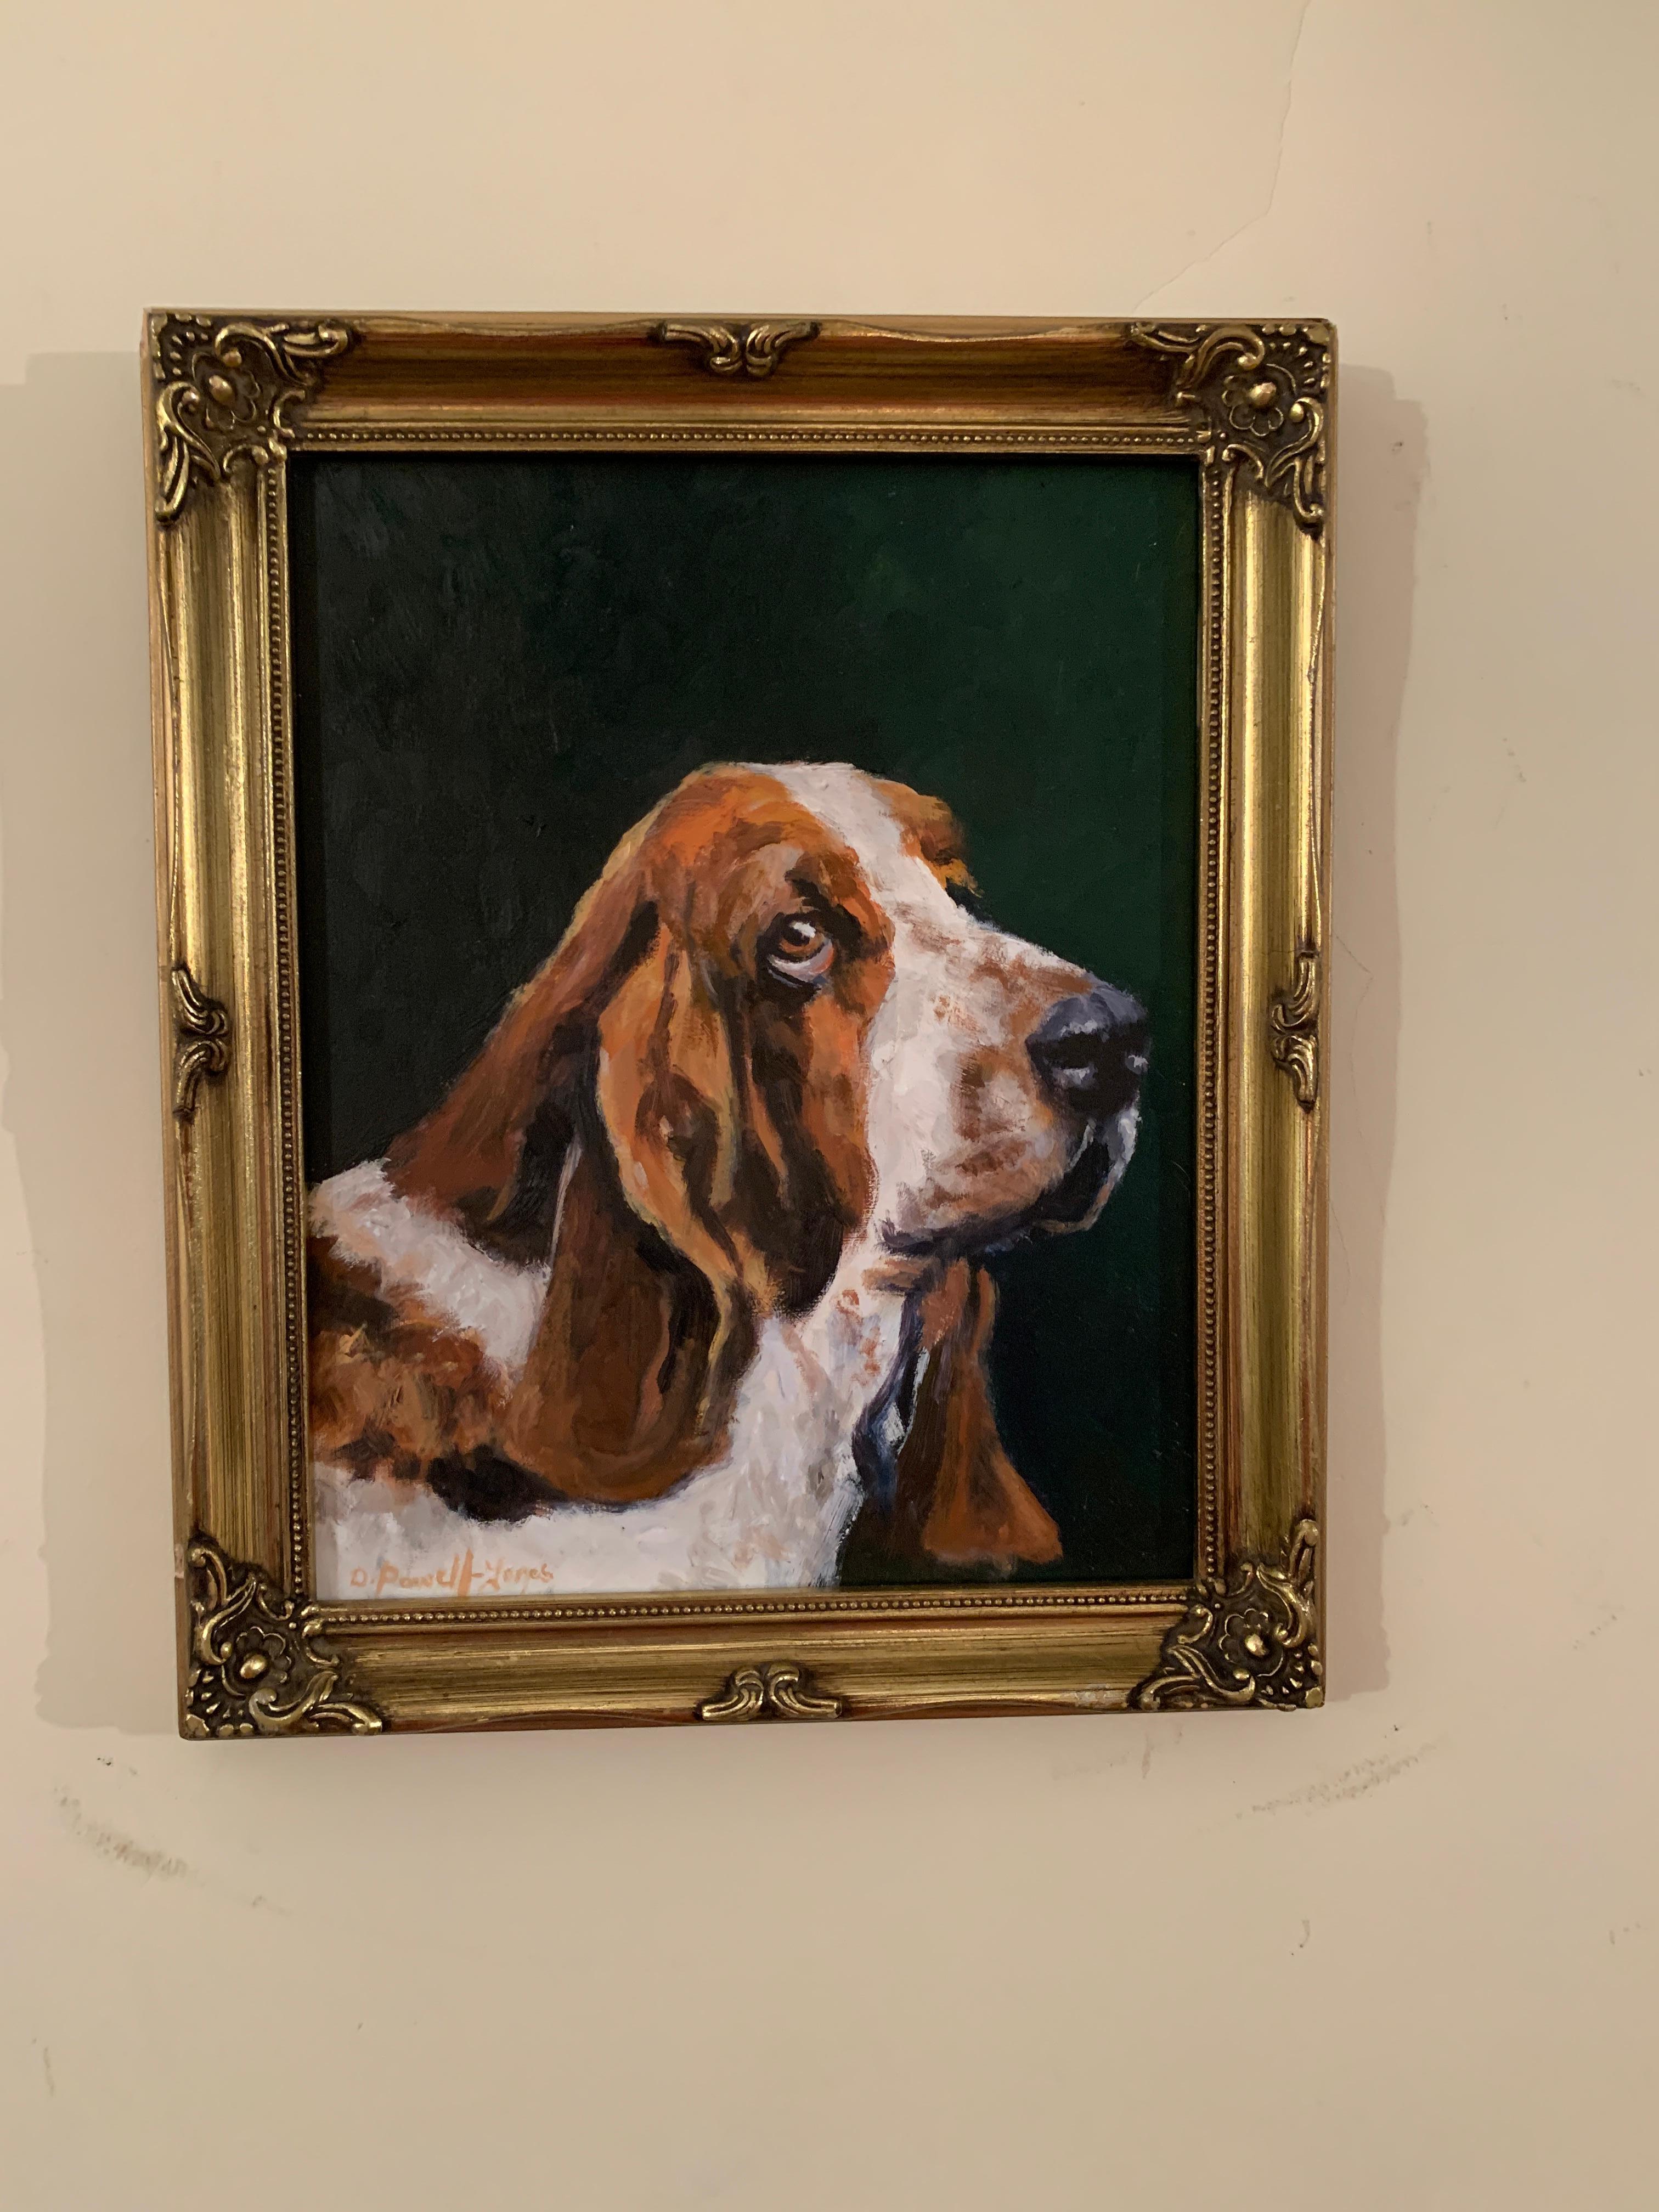 Derek Powell-Jones Figurative Painting - Oil painting of an English Bassett Hound dog portrait in an interior.